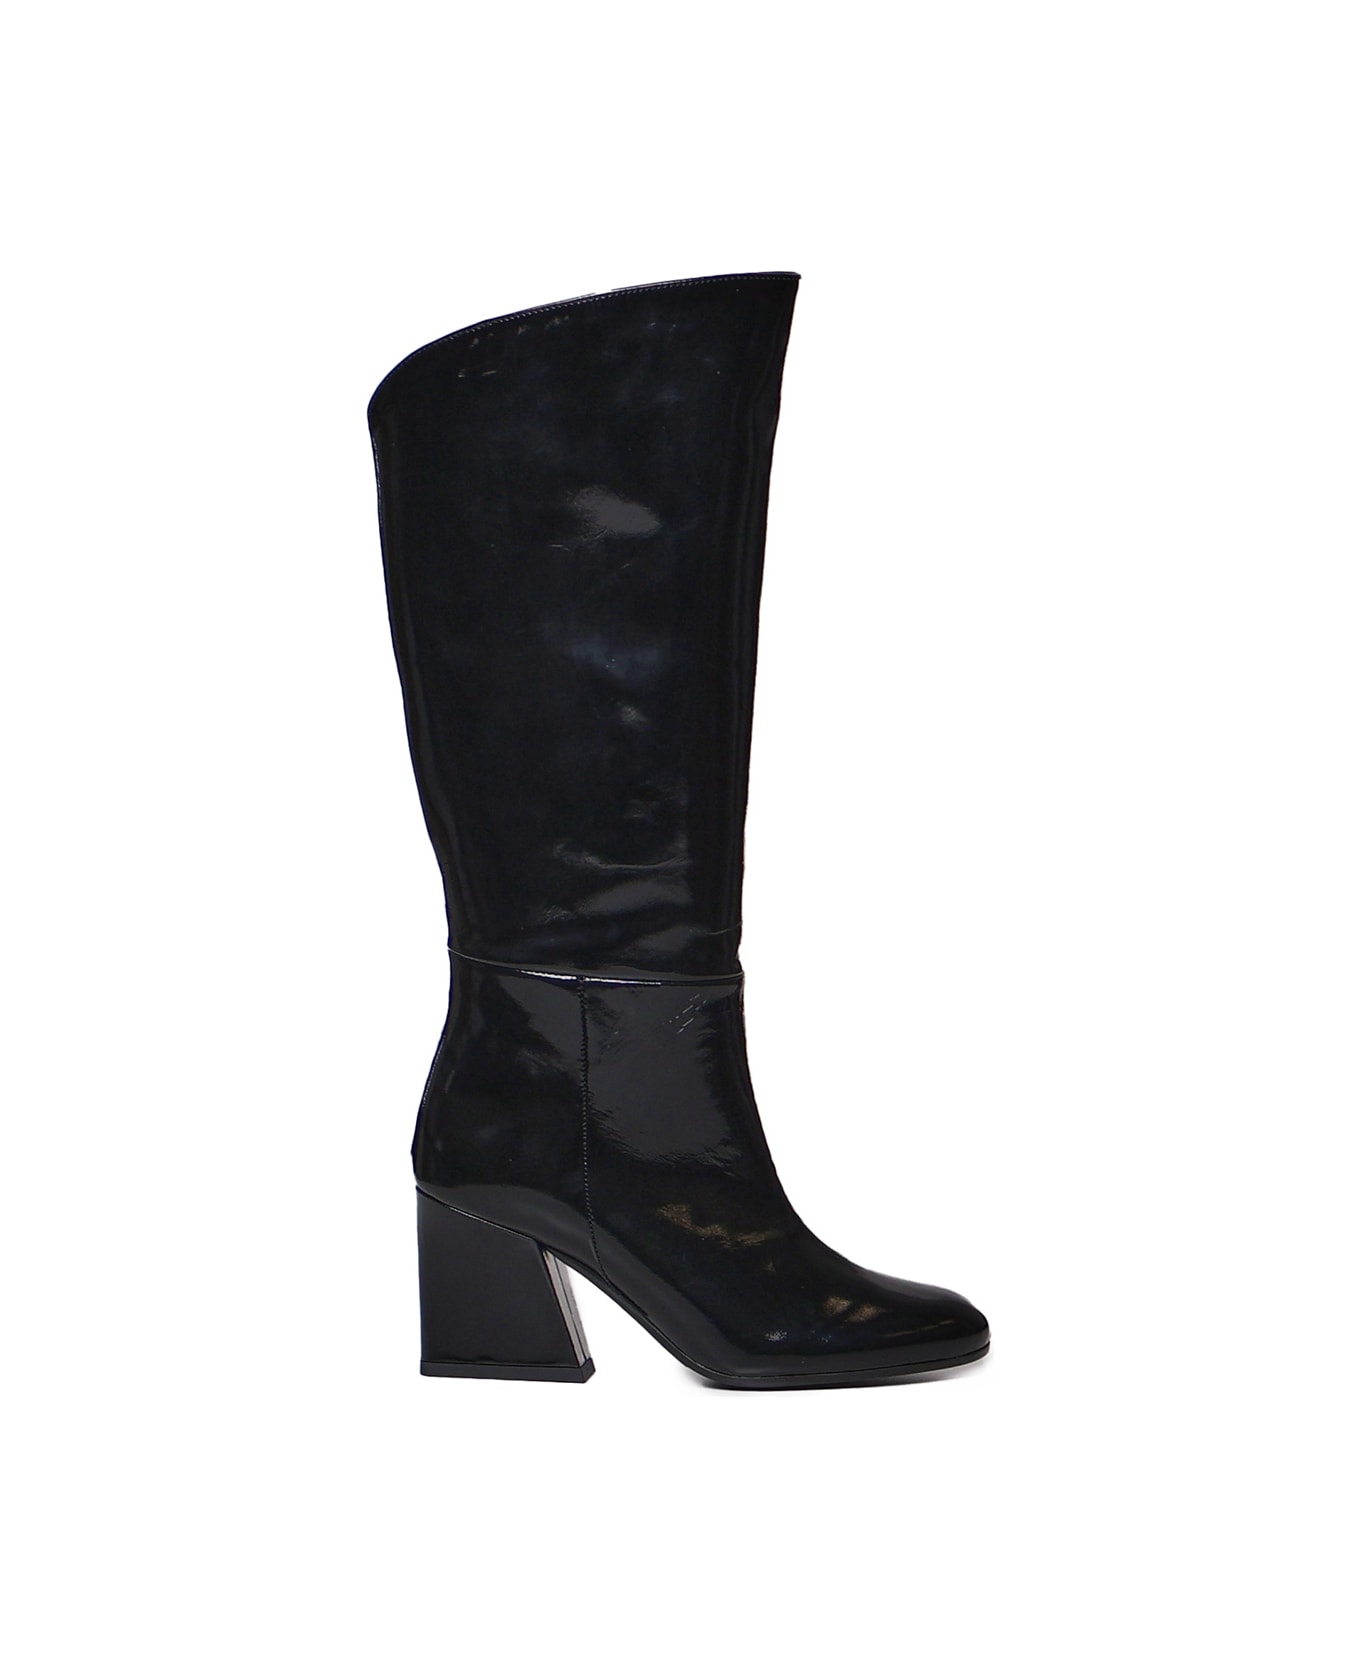 Marc Ellis Patent Leather Boot - Black